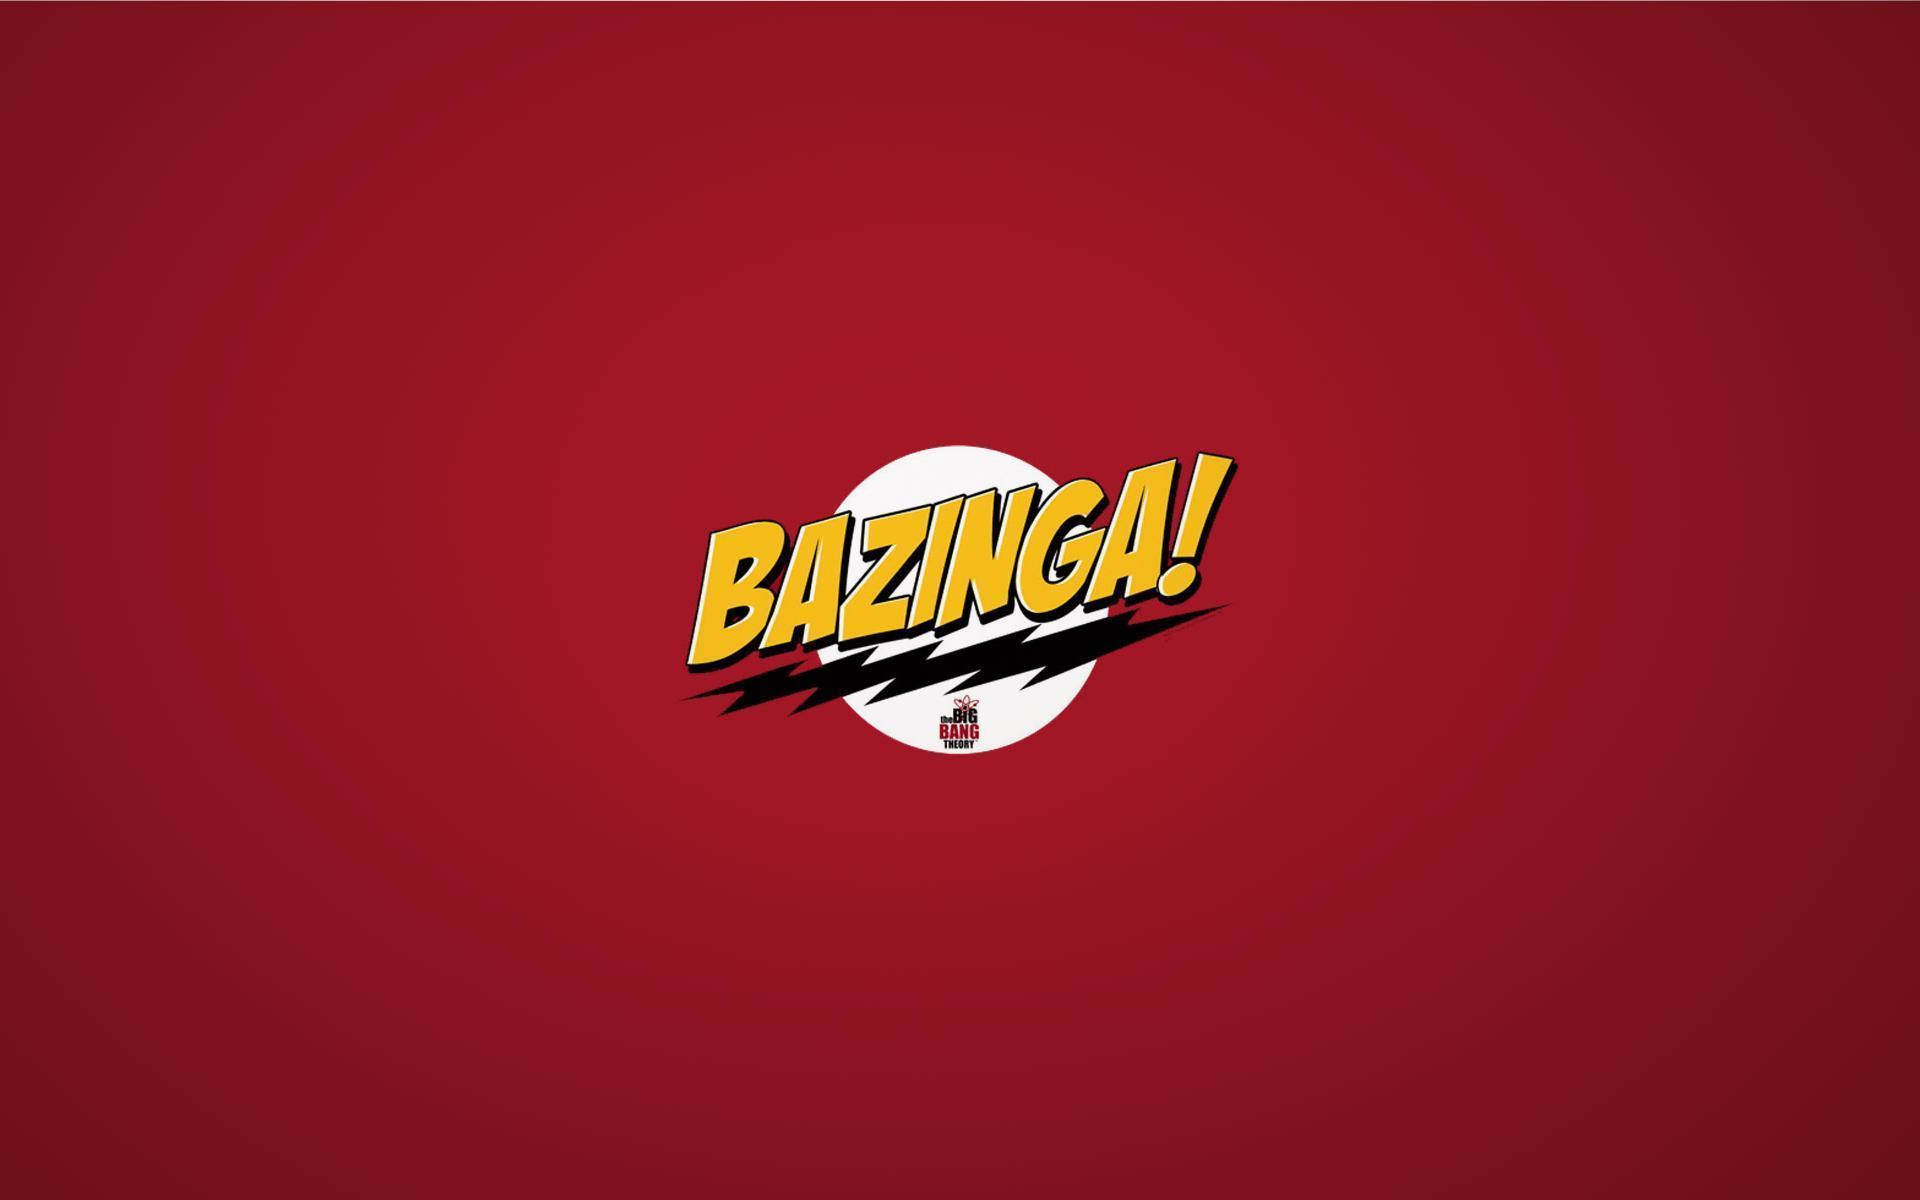 The Big Bang Theory Red Bazinga Background